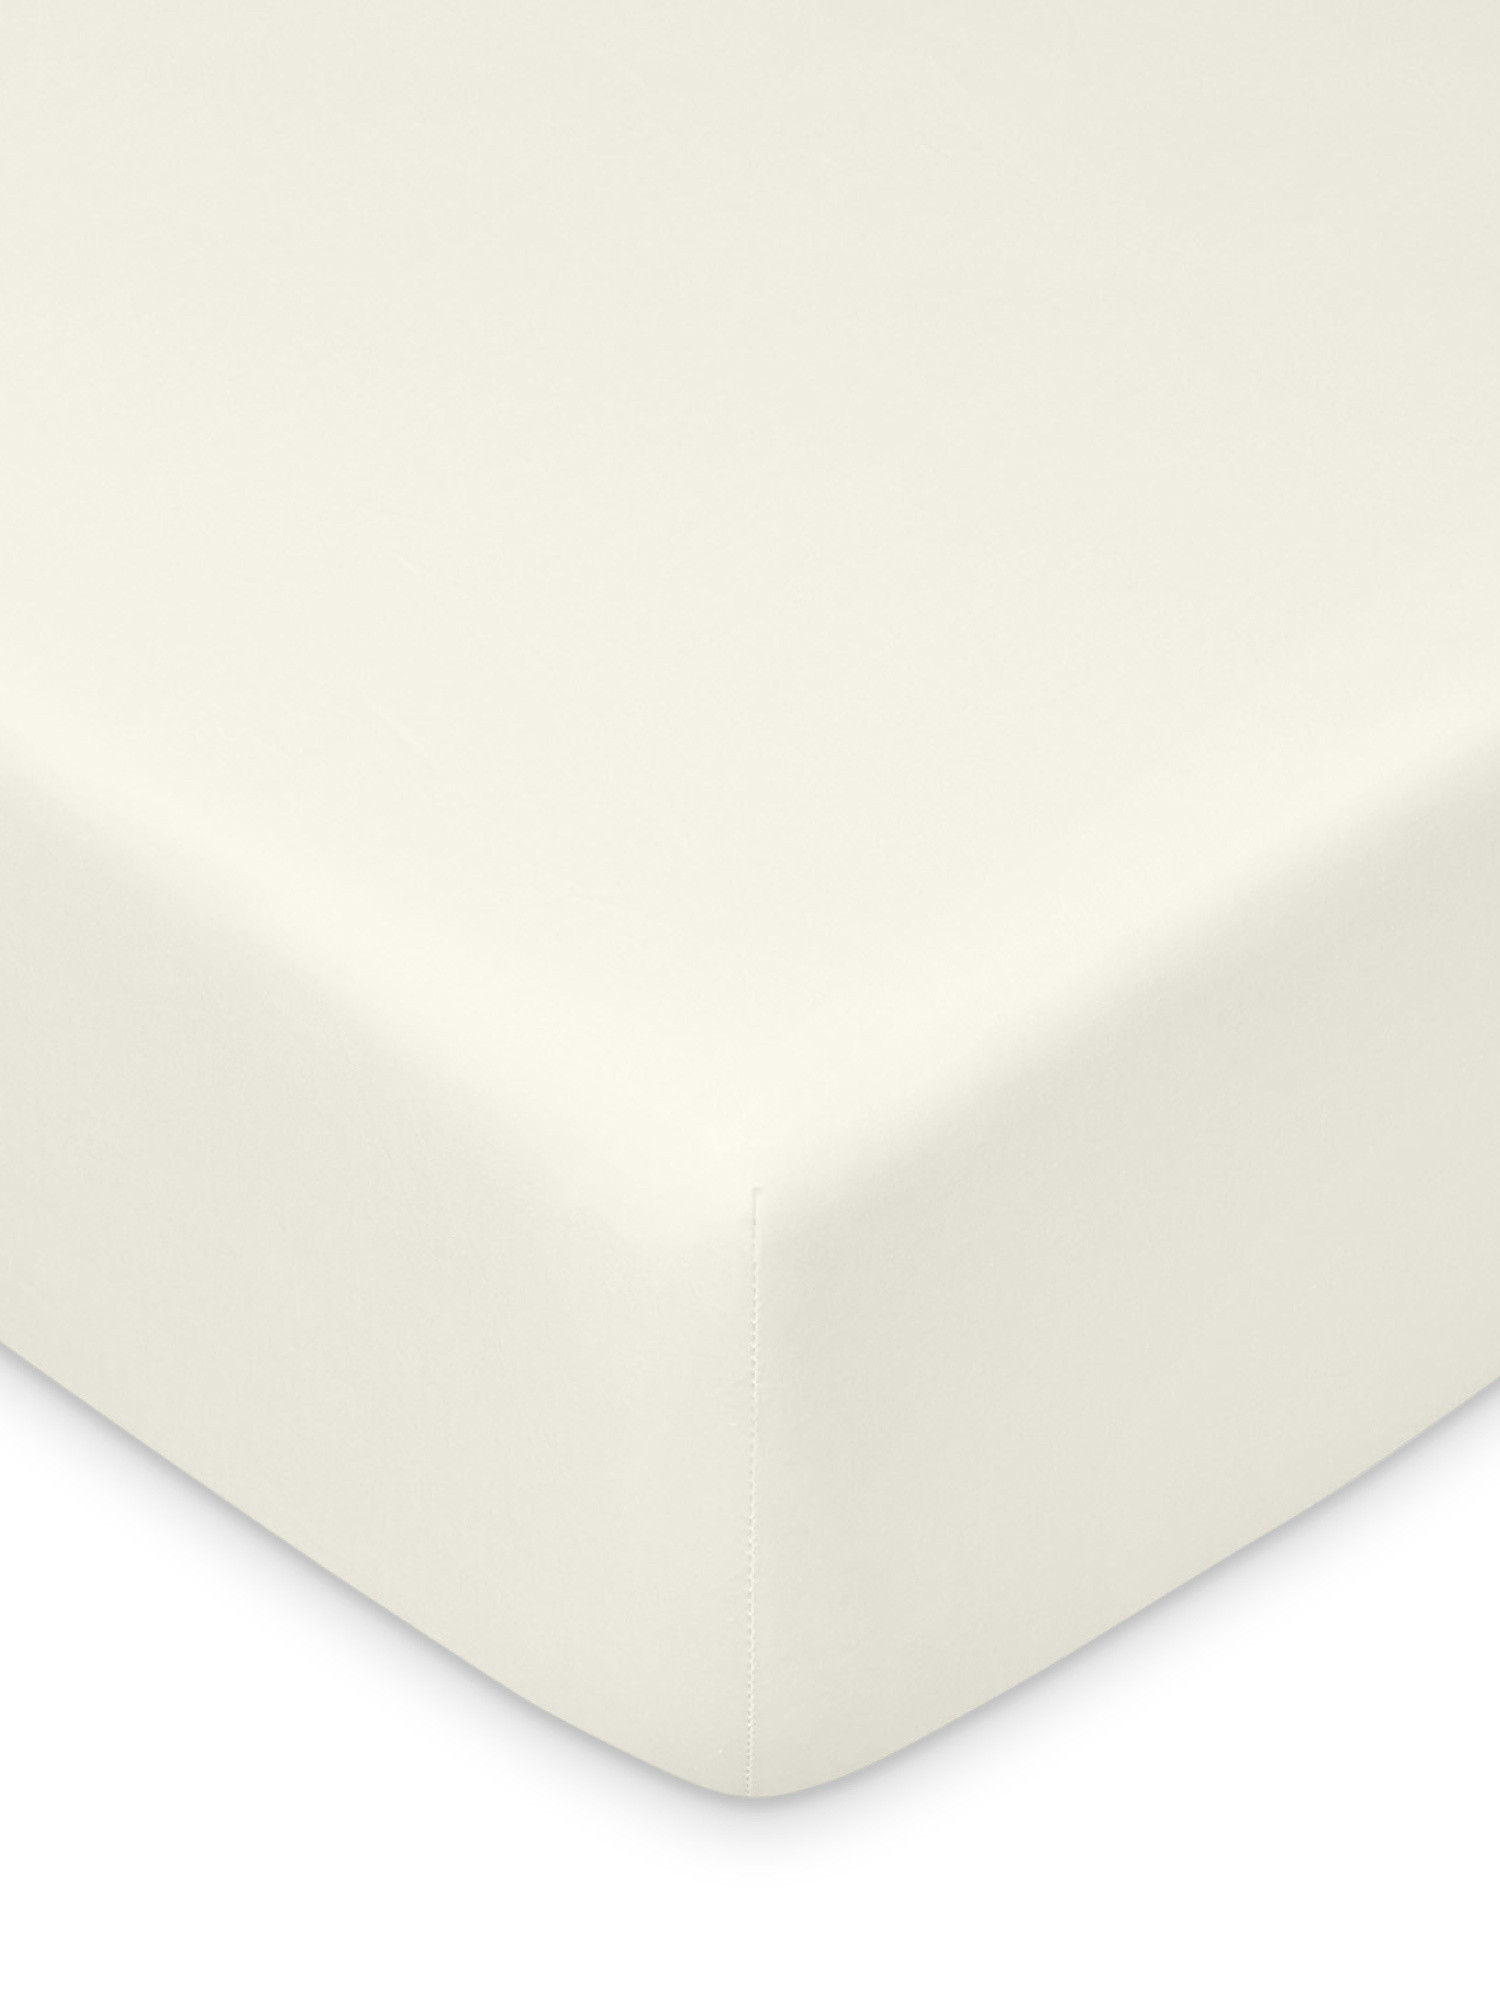 Lanzuolo con angoli cotone percalle tinta unita, Bianco, large image number 0